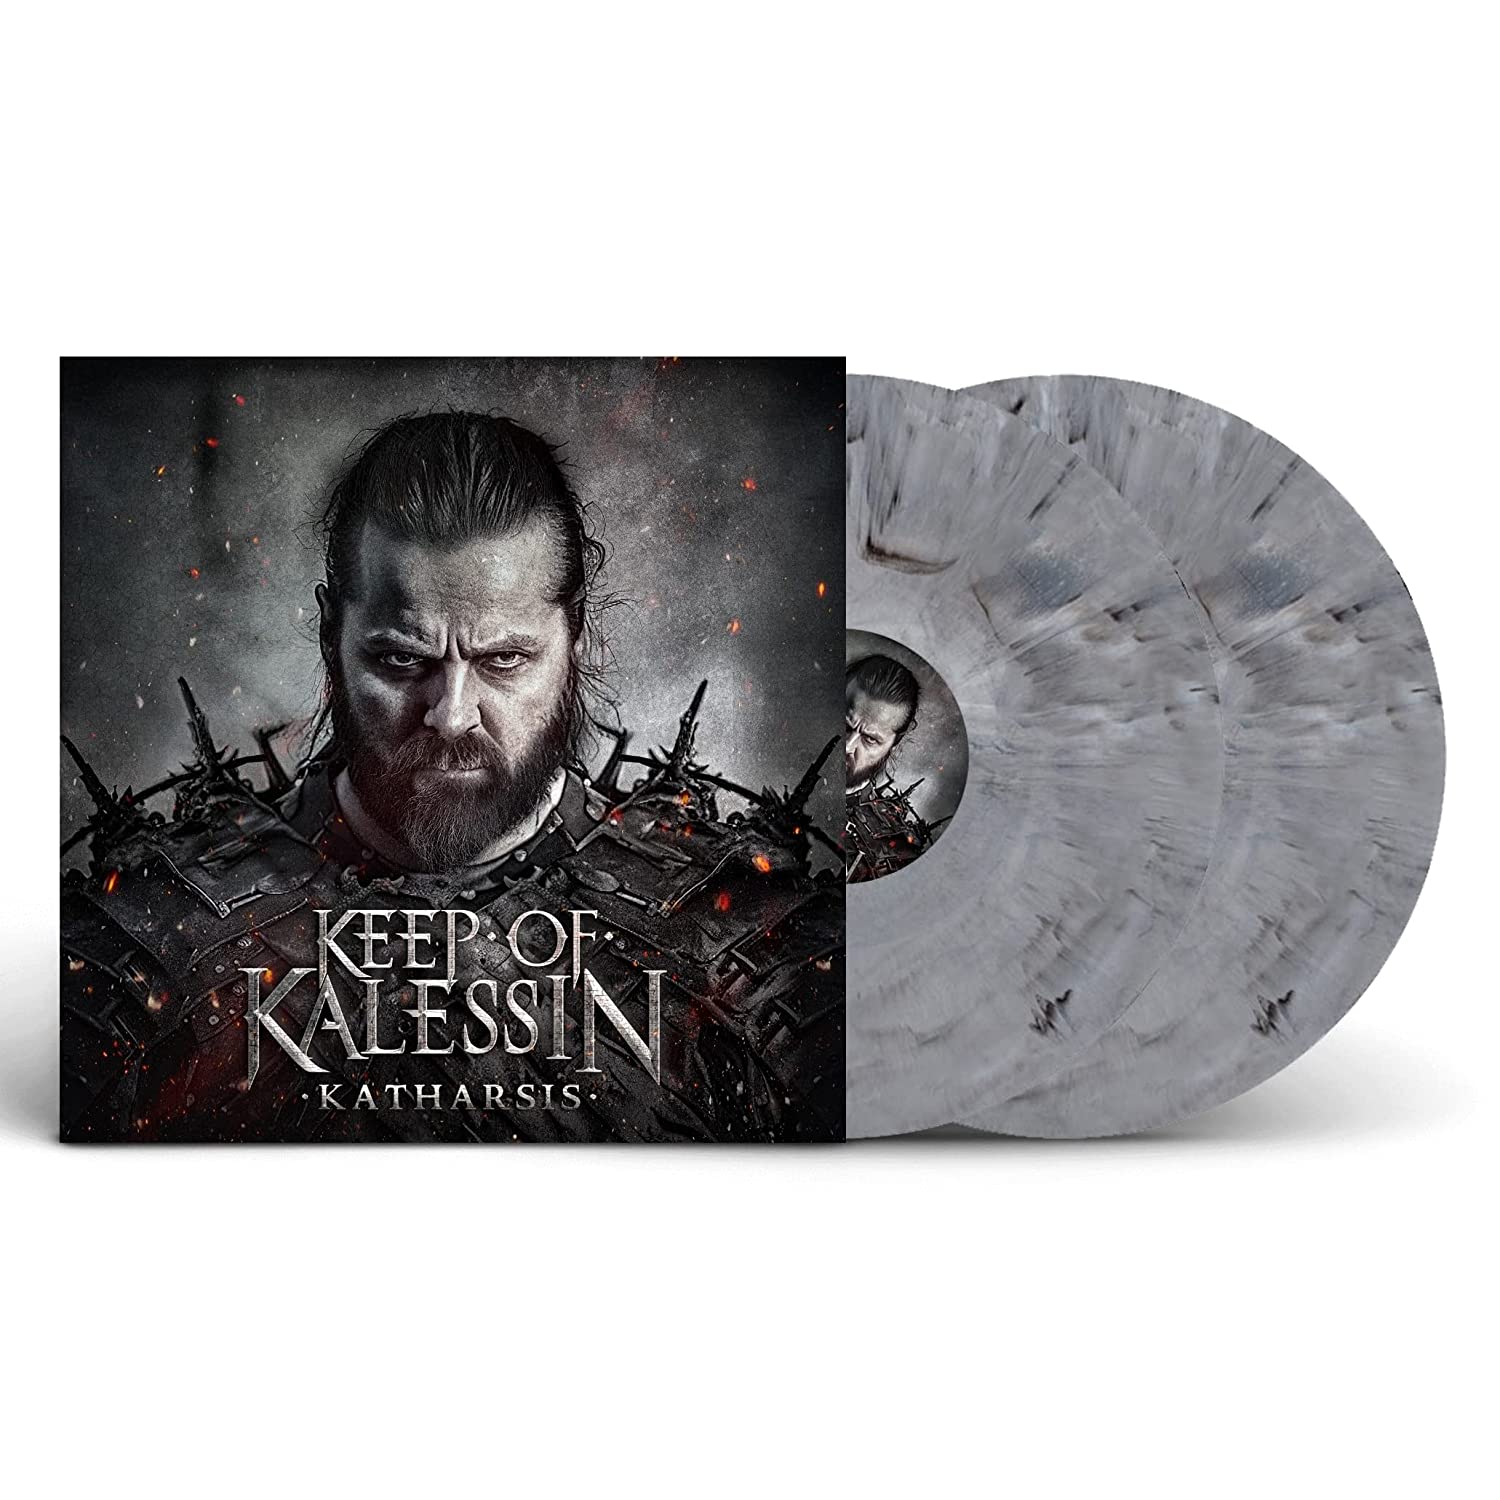 Keep Of Kalessin - Katharsis (Ltd. Ed. 2LP Grey with Black Splatter vinyl gatefold) - Vinyl - New